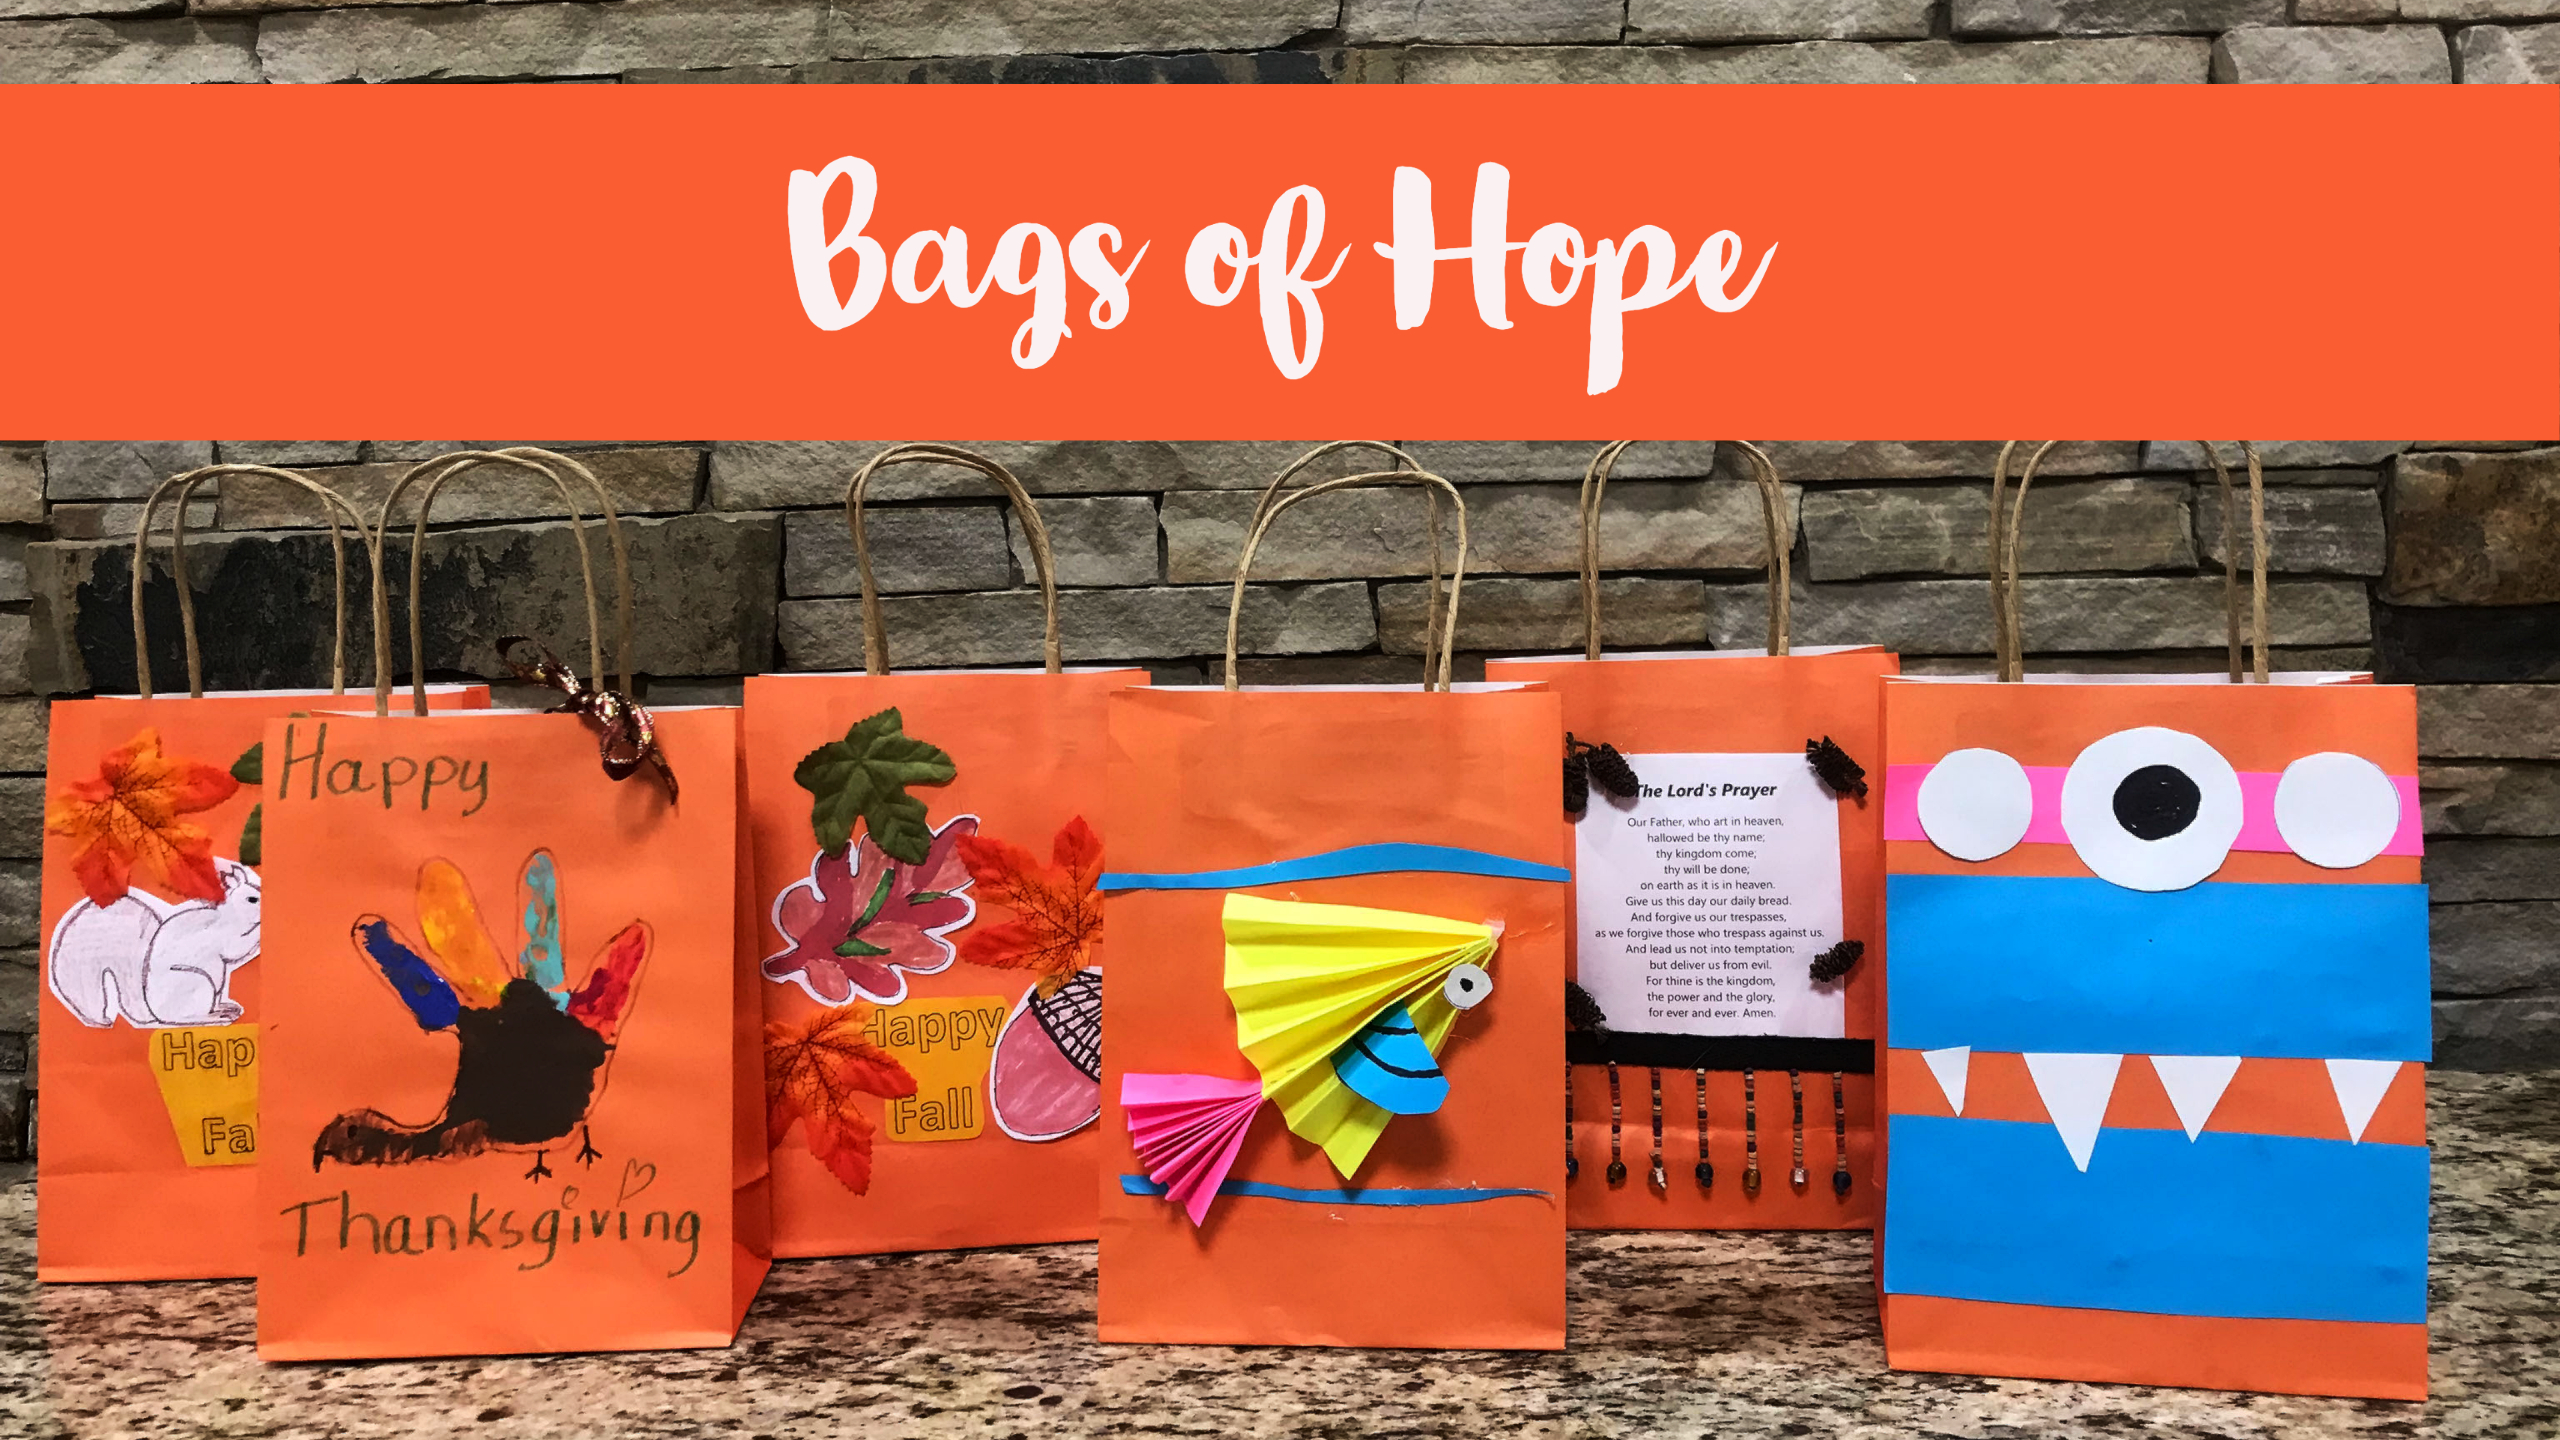 Bags of hope- senior ministry